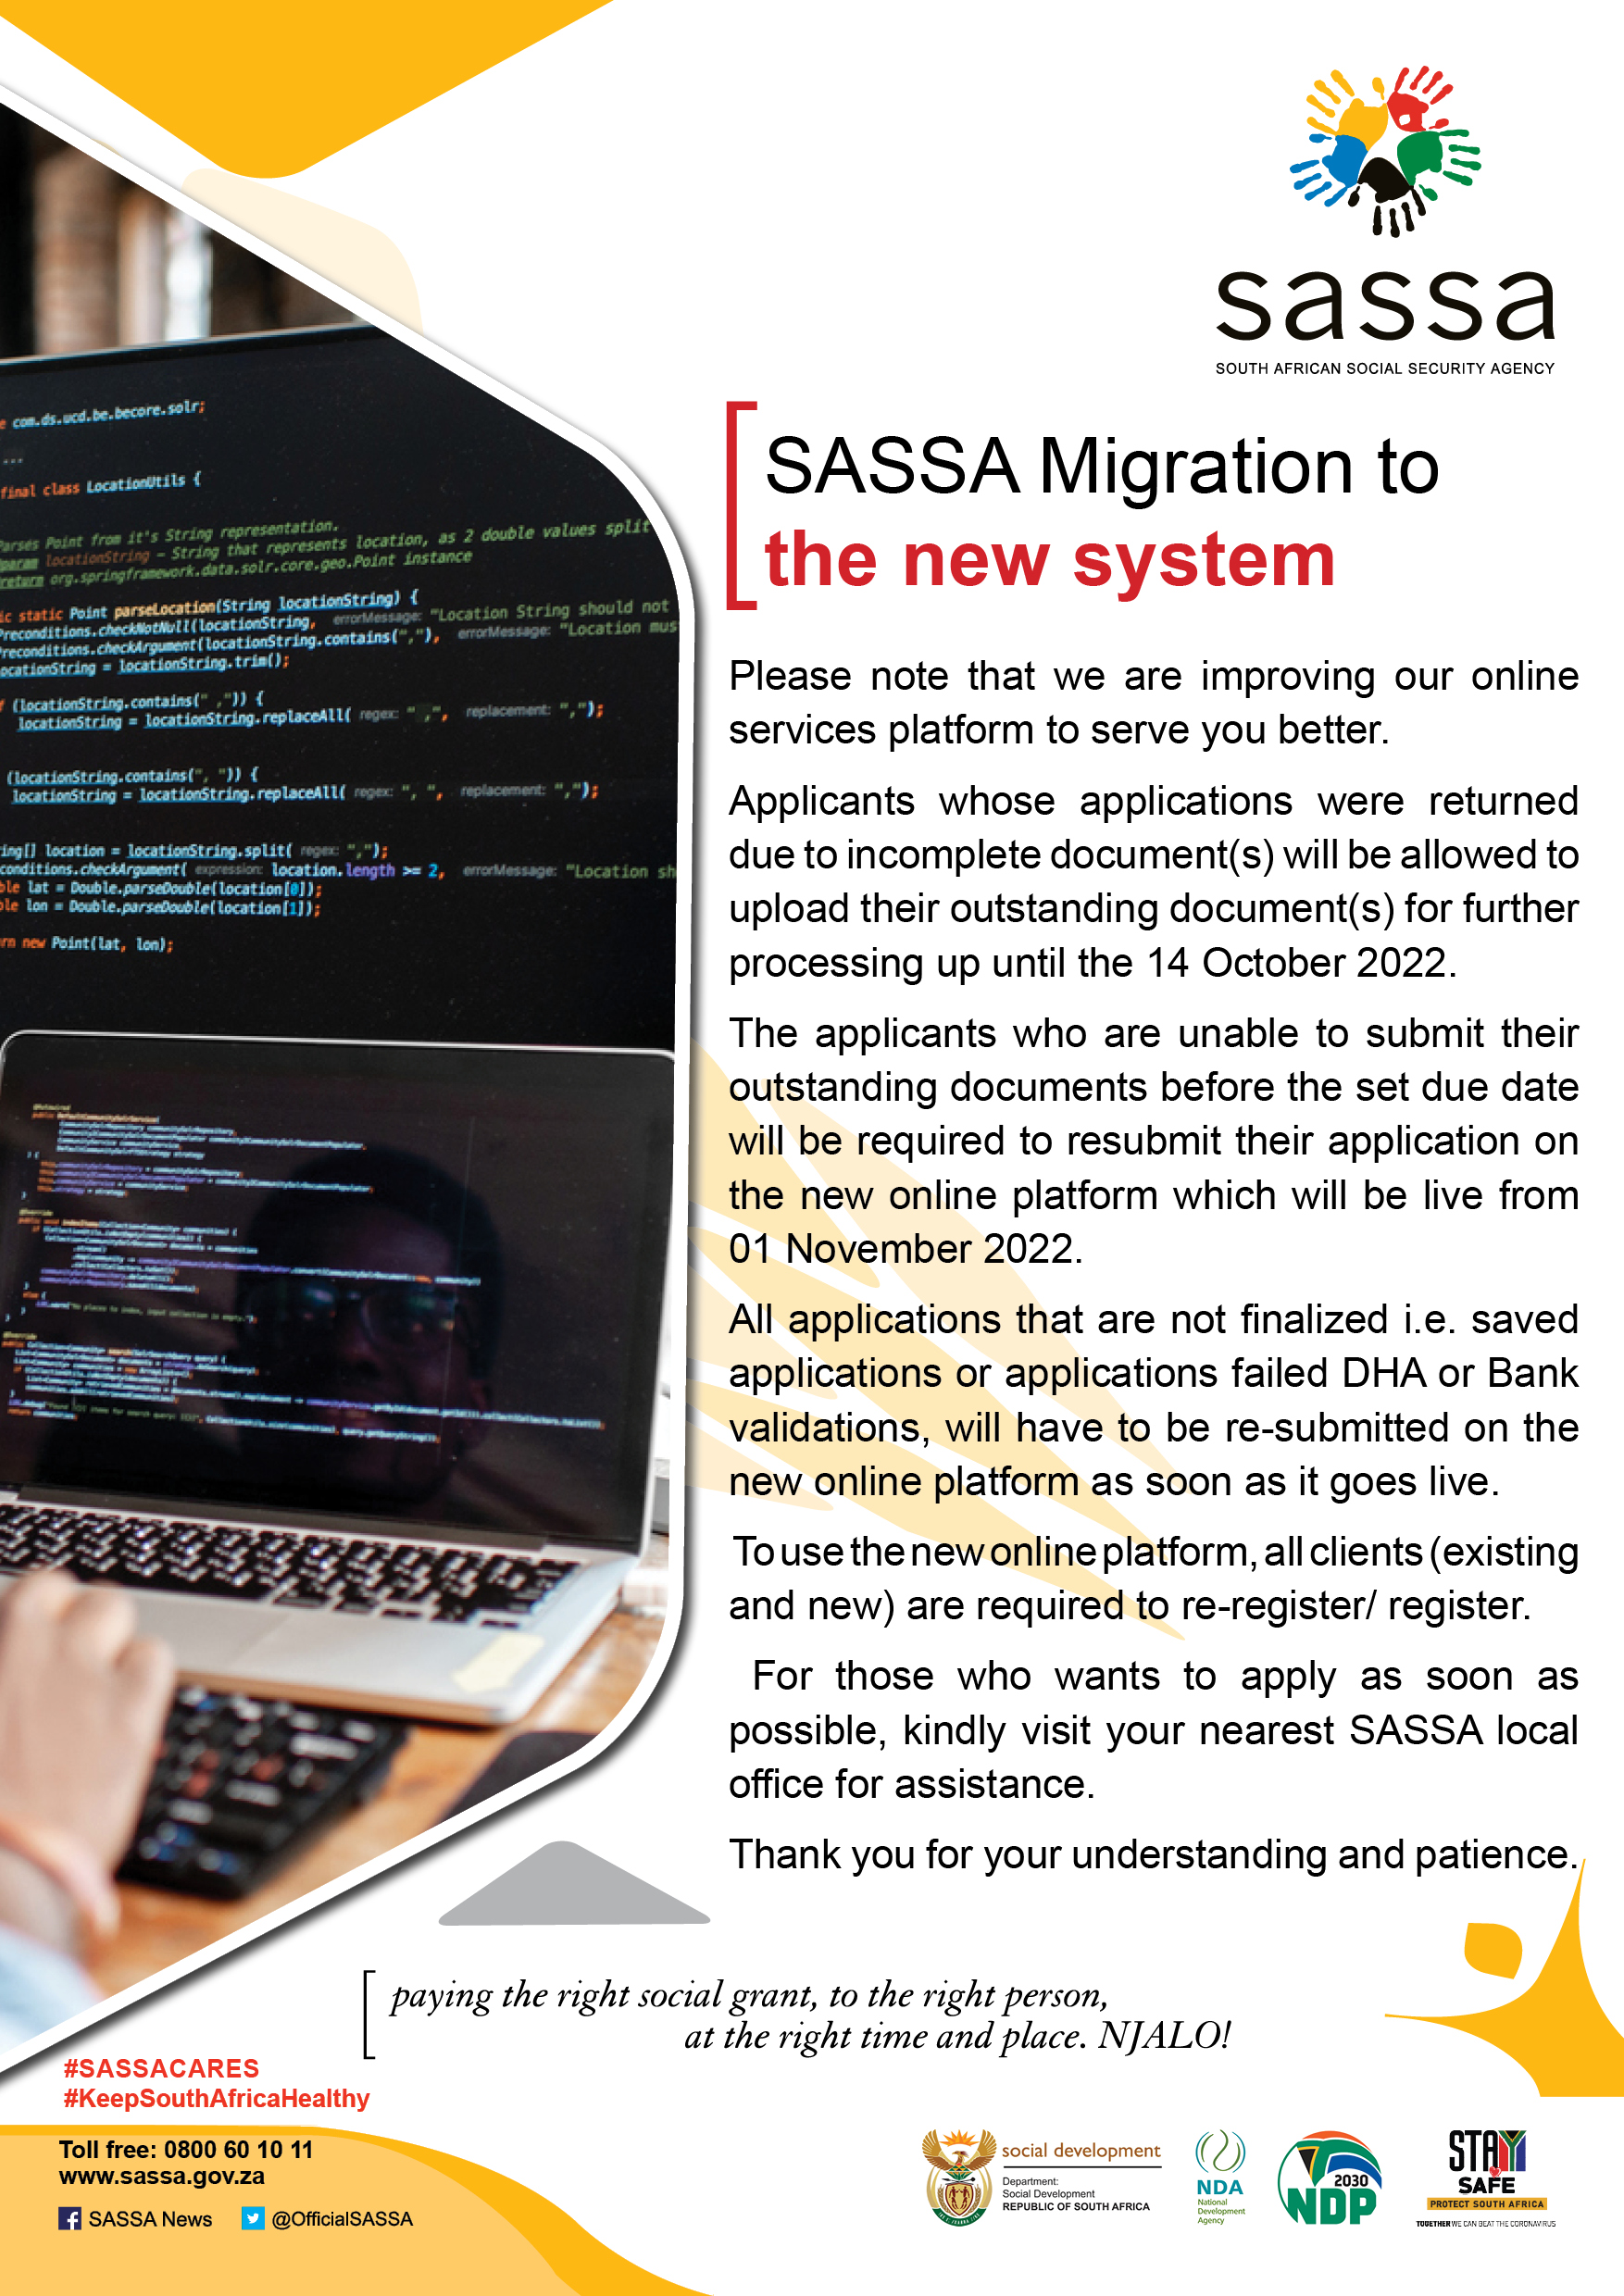 SASSA Migration to New System